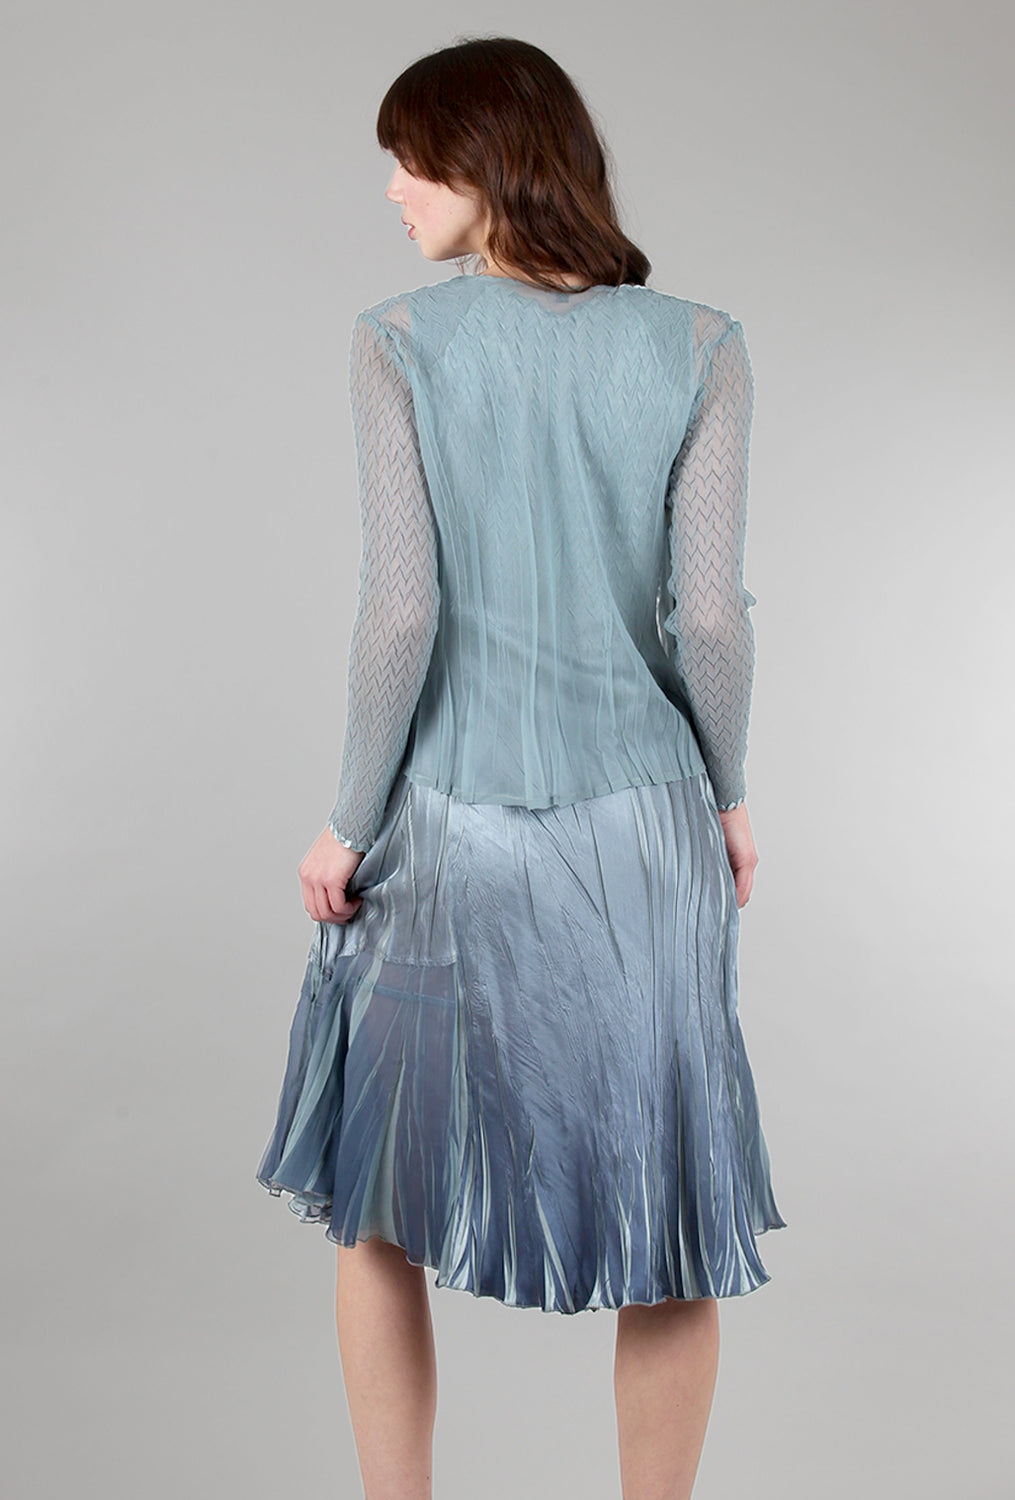 Komarov Carolyn Dress/Jacket Combo, Ocean Blue Ombre 